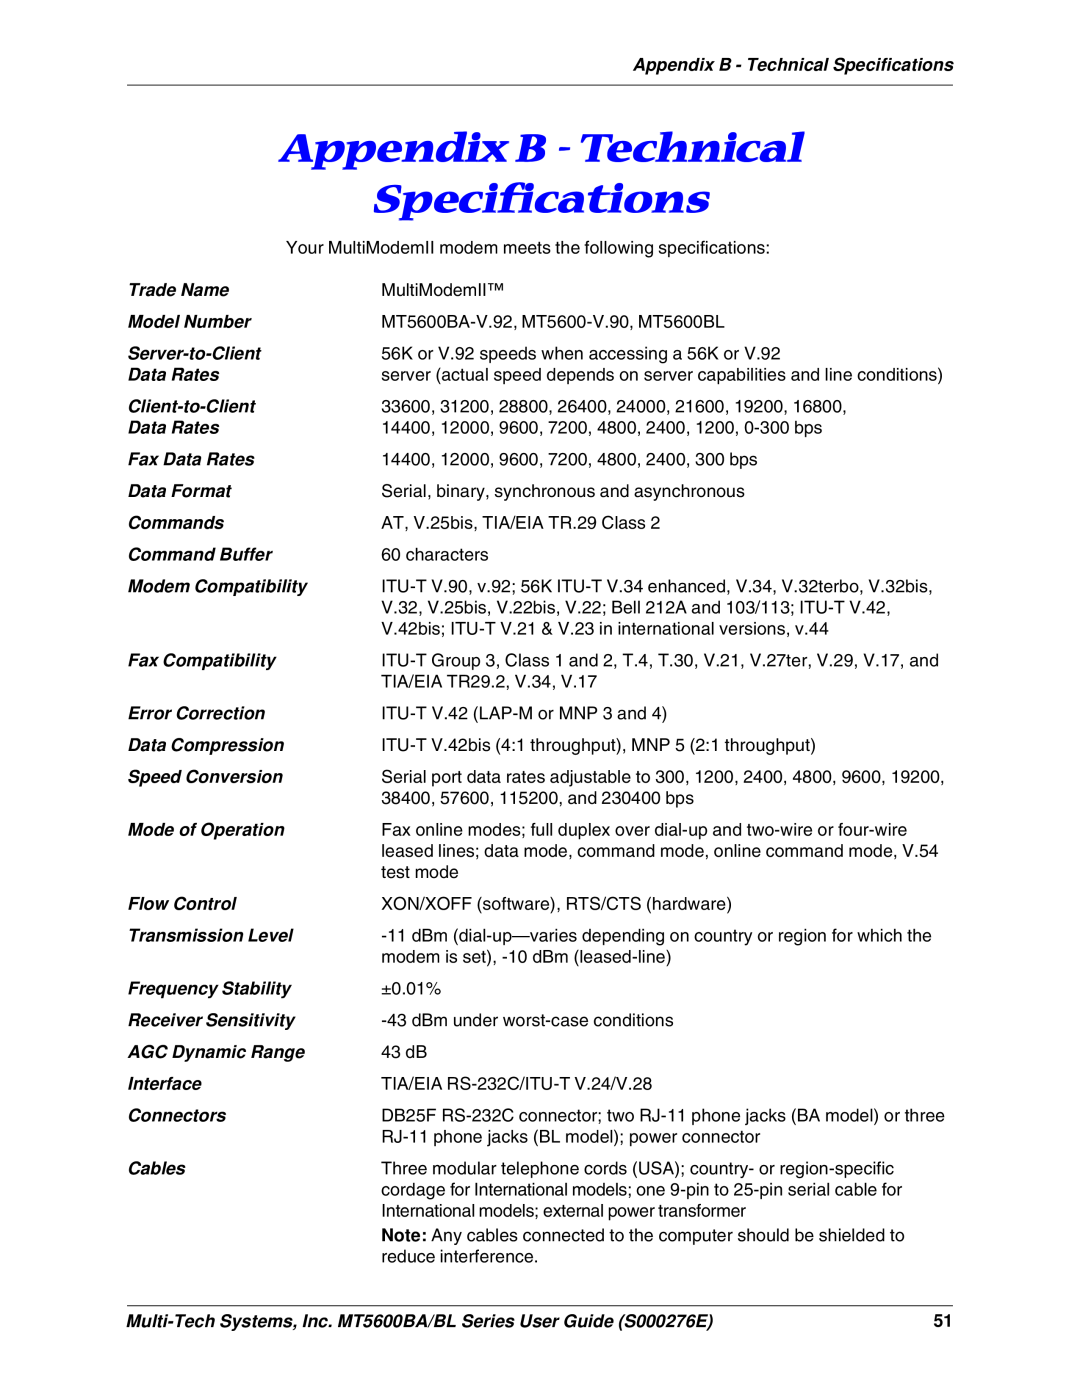 Multitech MT5600BA, MT5600BL manual Appendix B - Technical Specifications 